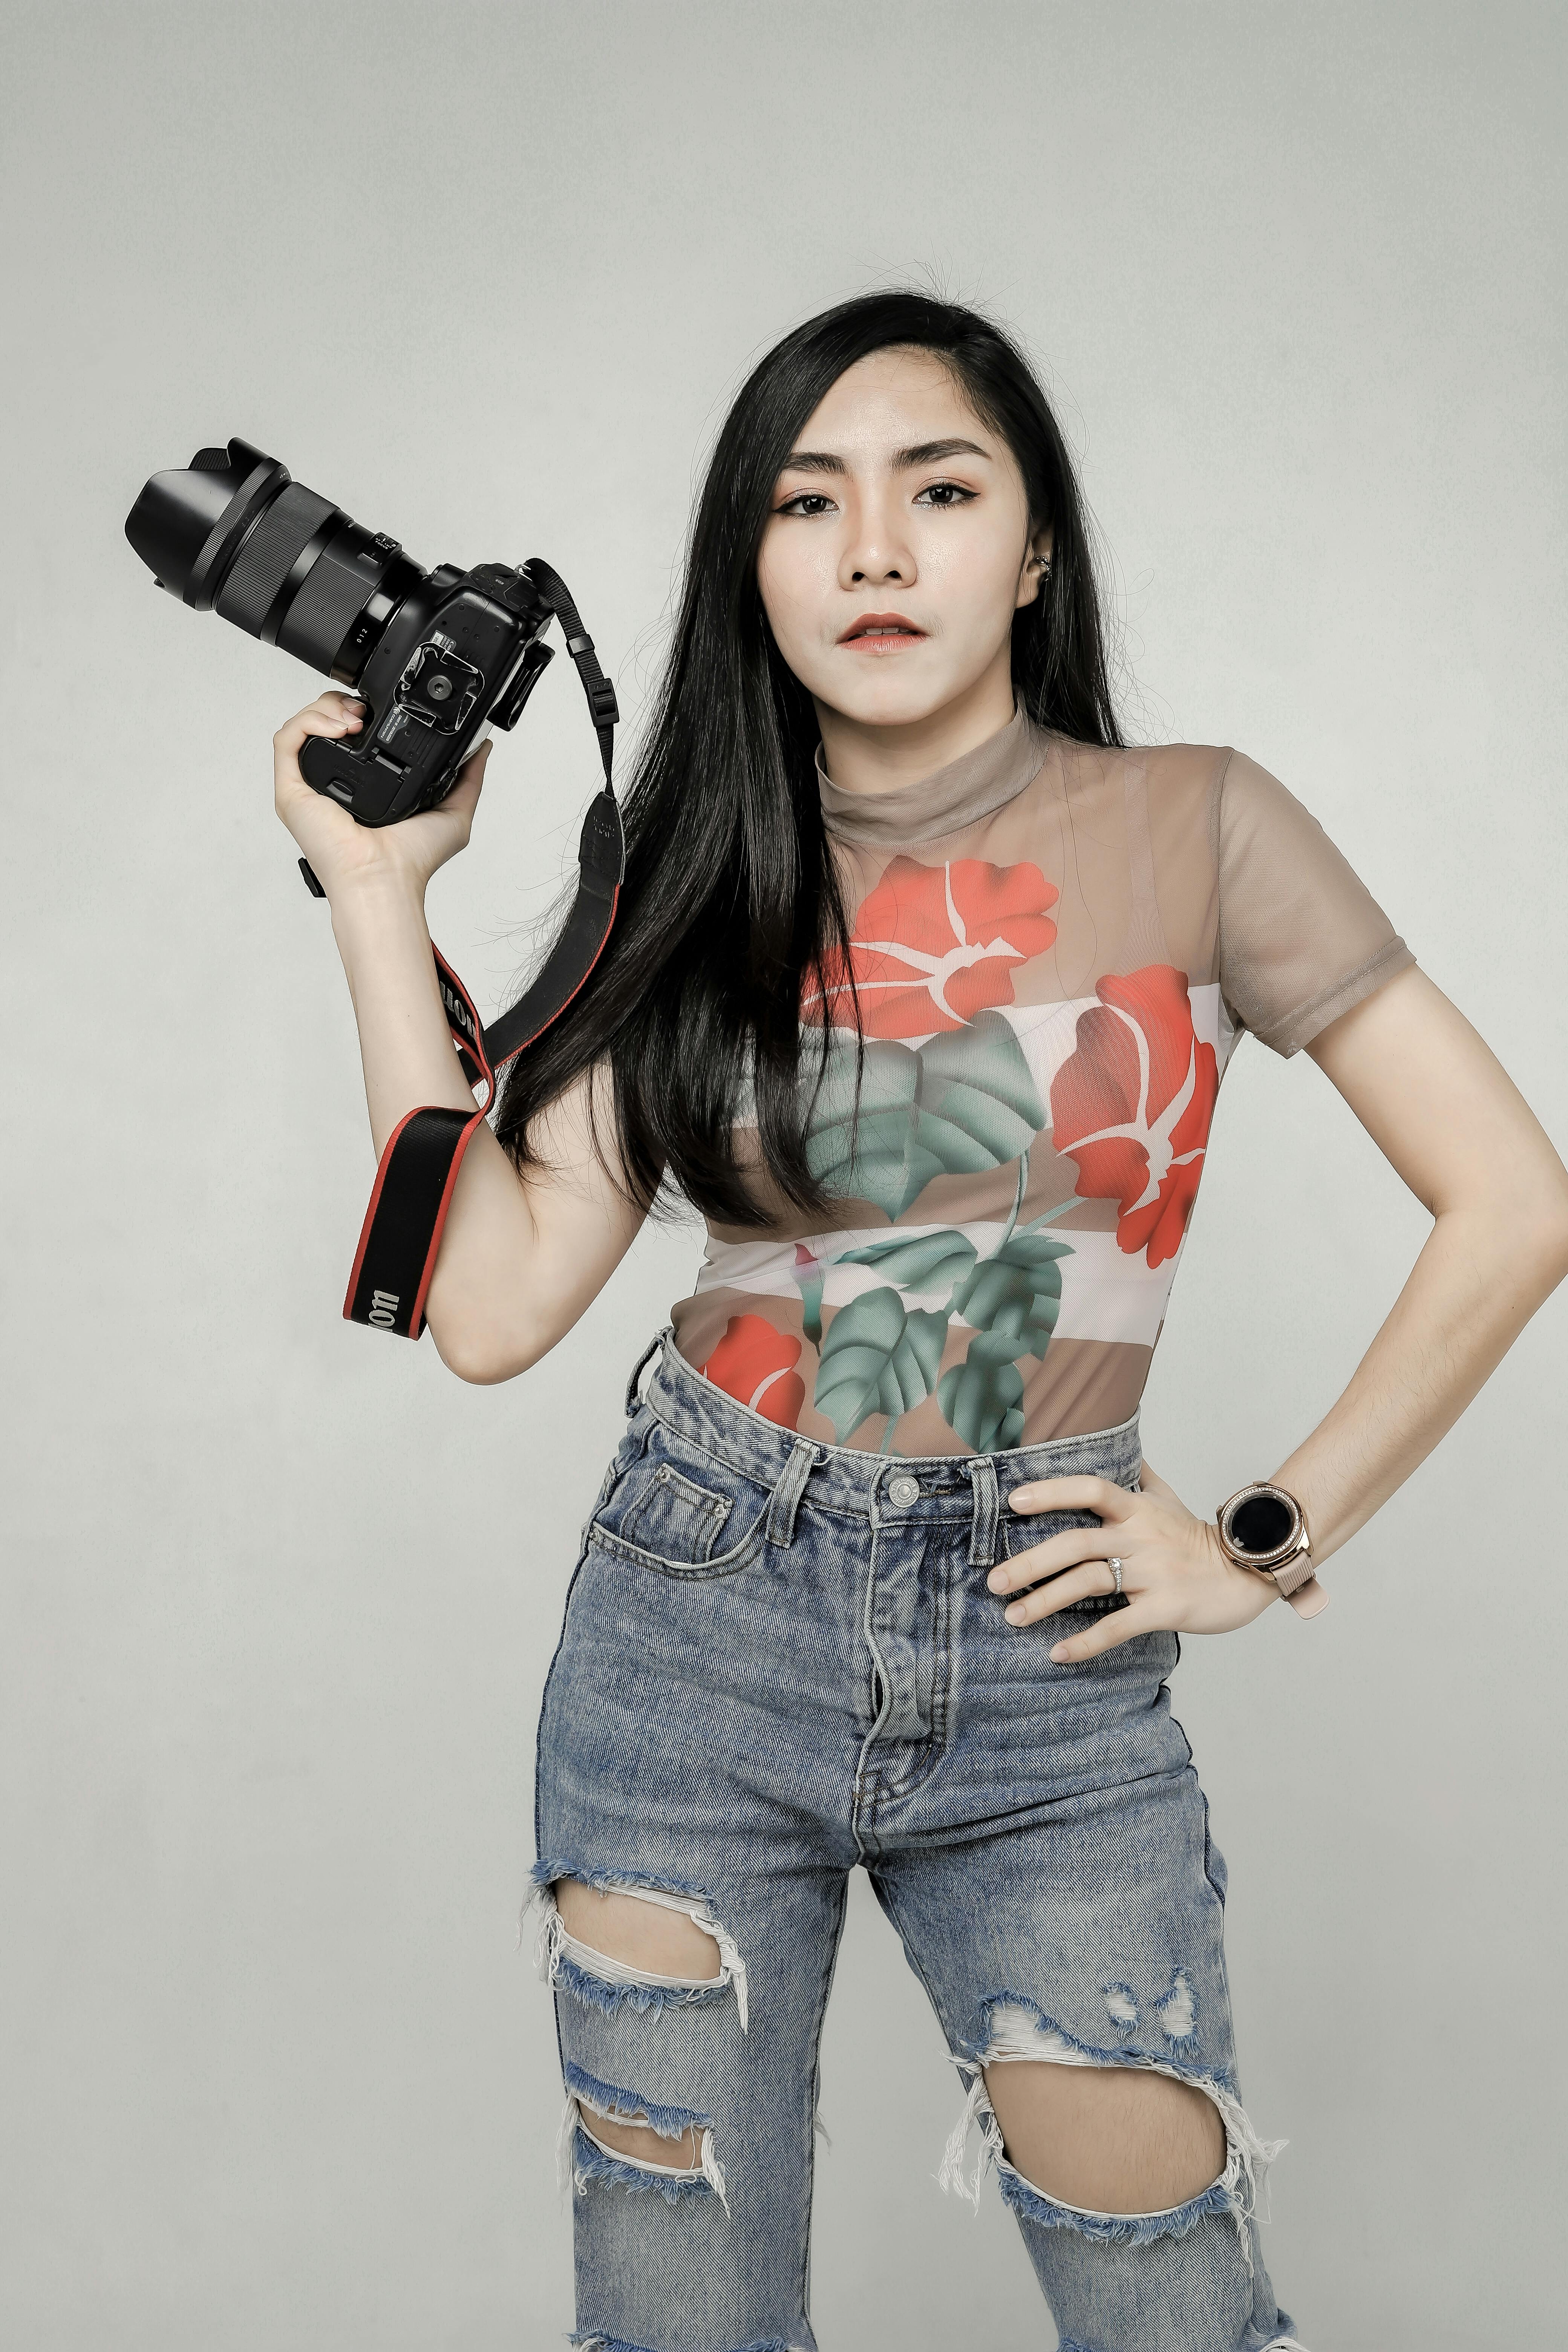 Dslr Photography Poses For Girl || Best photo poses girl 2019 ||♢ - YouTube